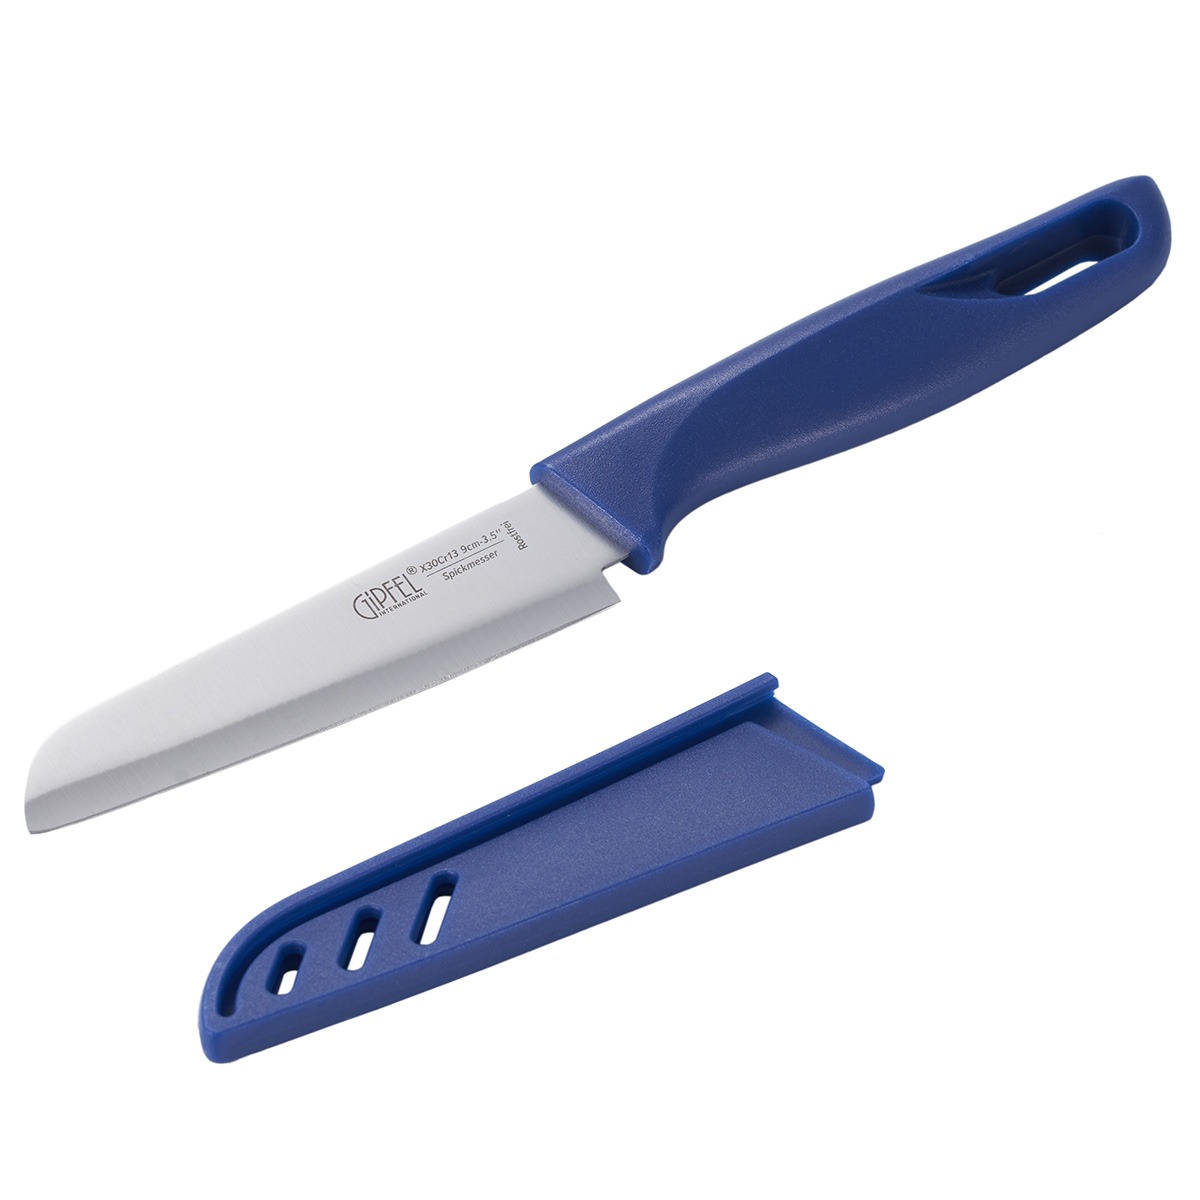 Нож для чистки овощей Gipfel Sorti стальной синий 9 см нож для чистки овощей и фруктов 60 мм